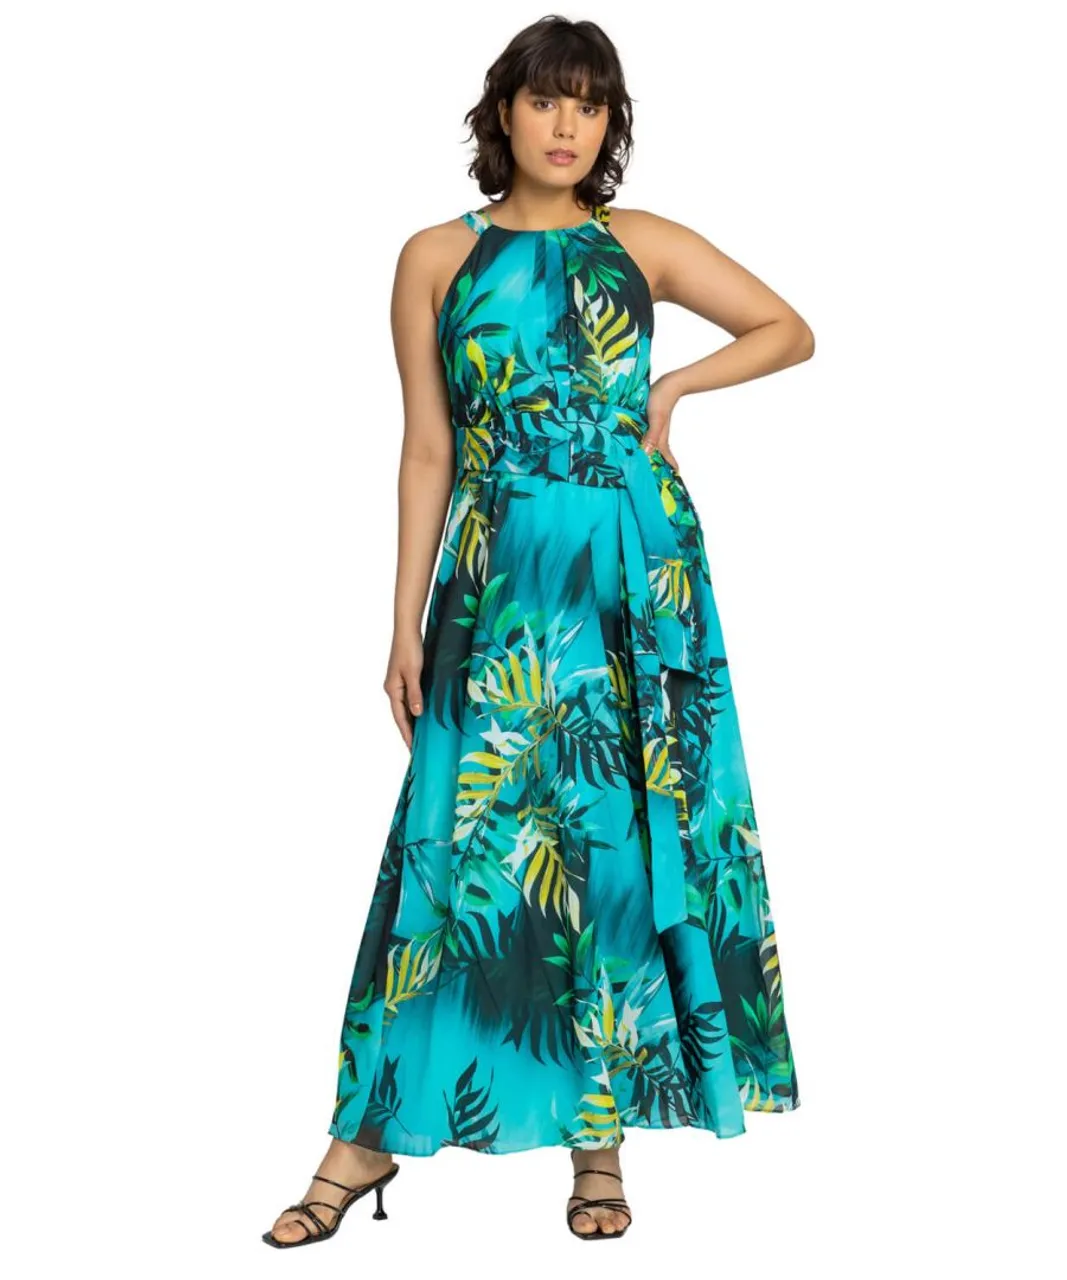 Roman Womens Tropical Print Maxi Dress - Turquoise